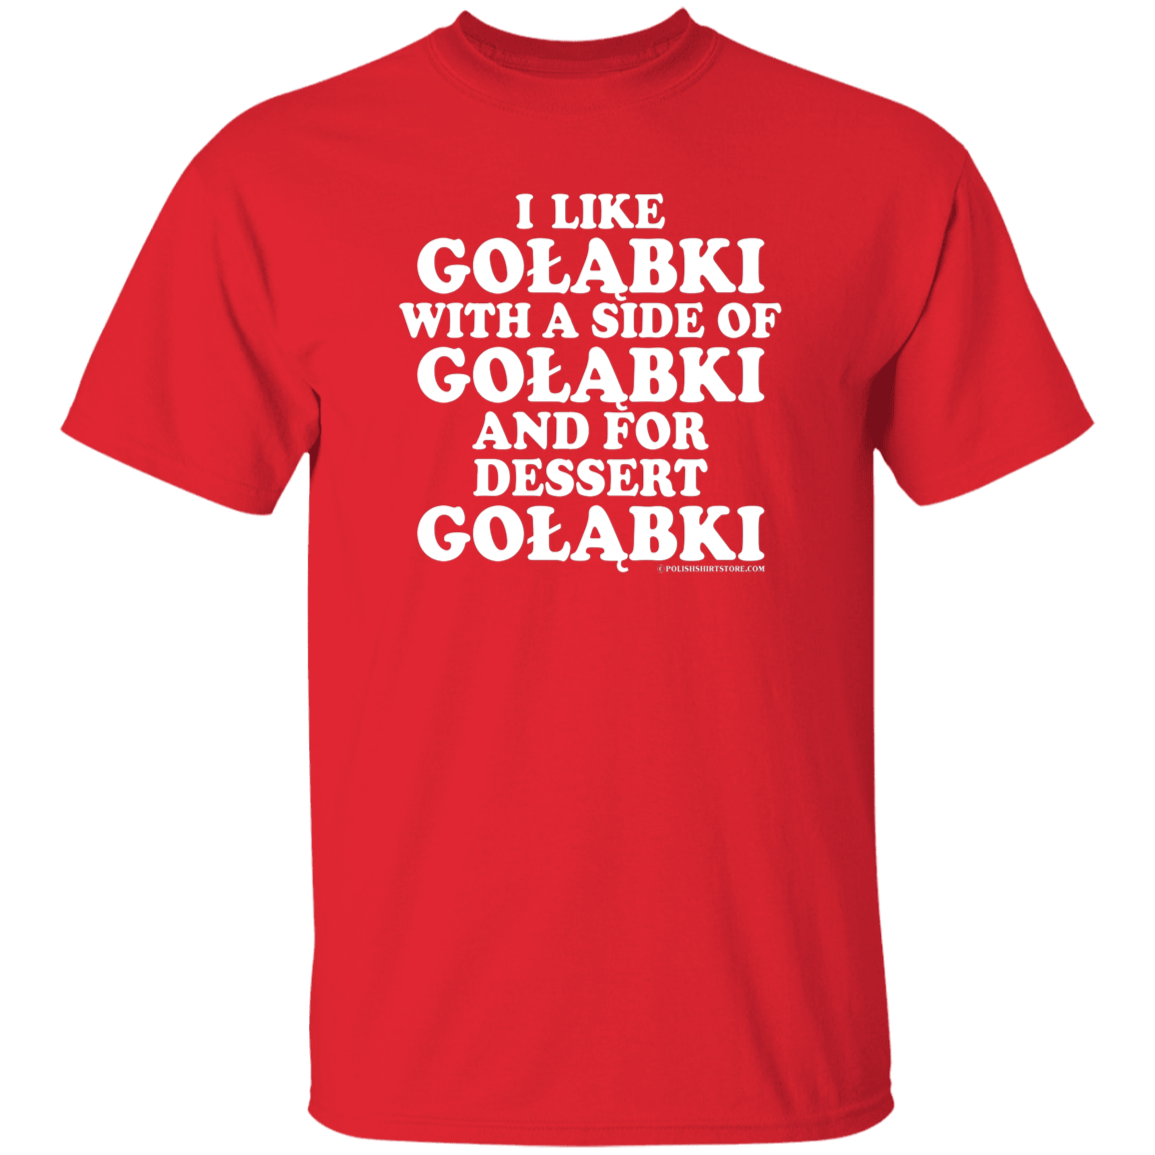 Golabki With A Side Of Golabki Apparel CustomCat G500 5.3 oz. T-Shirt Red S